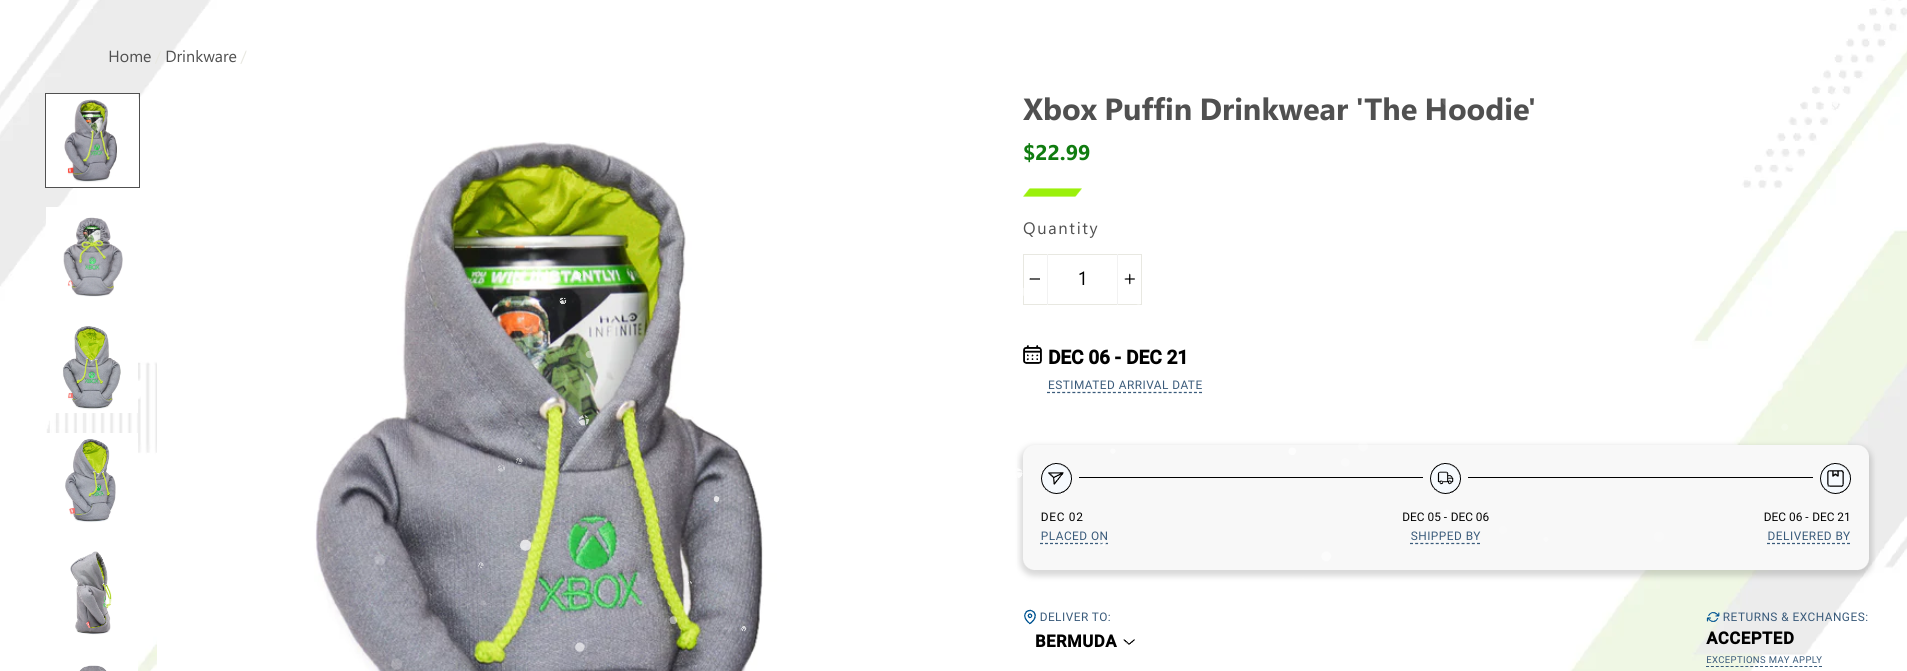 Xbox Puffin Drinkwear 'The Hoodie'